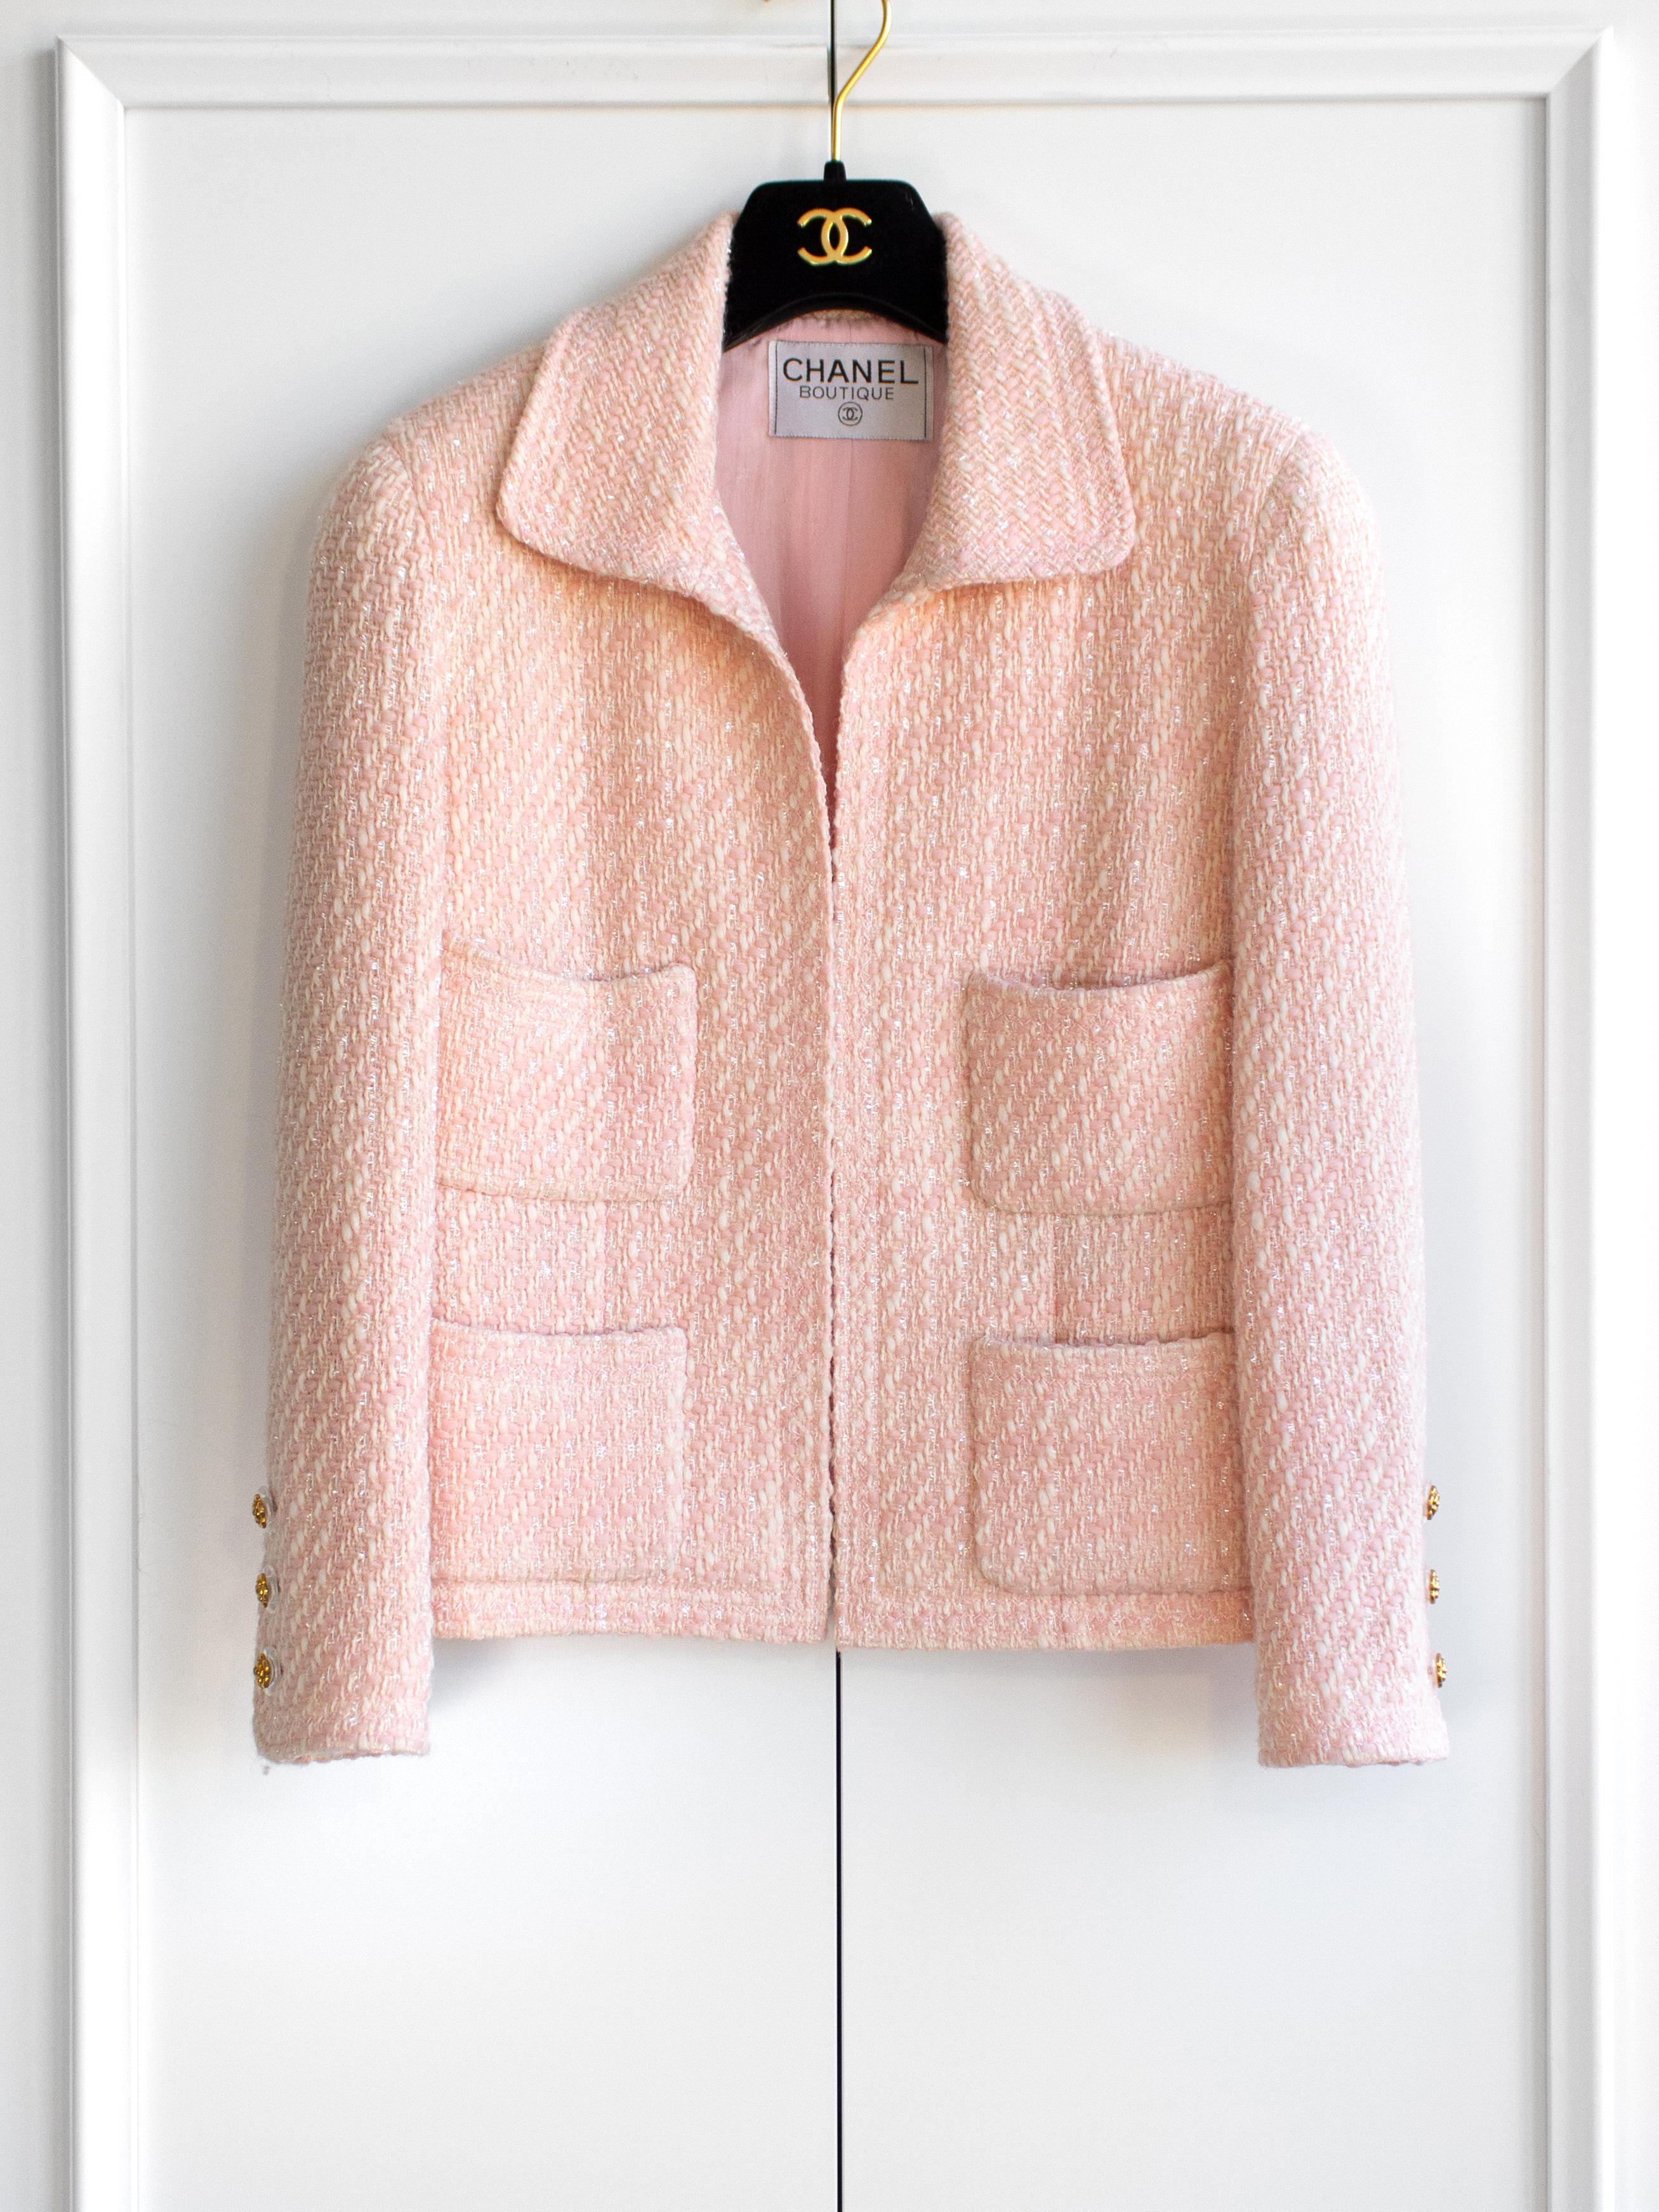 Rare Chanel Vintage S/S 1992 Pink Tweed Gold Camellia Jacket Skirt Suit For Sale 1